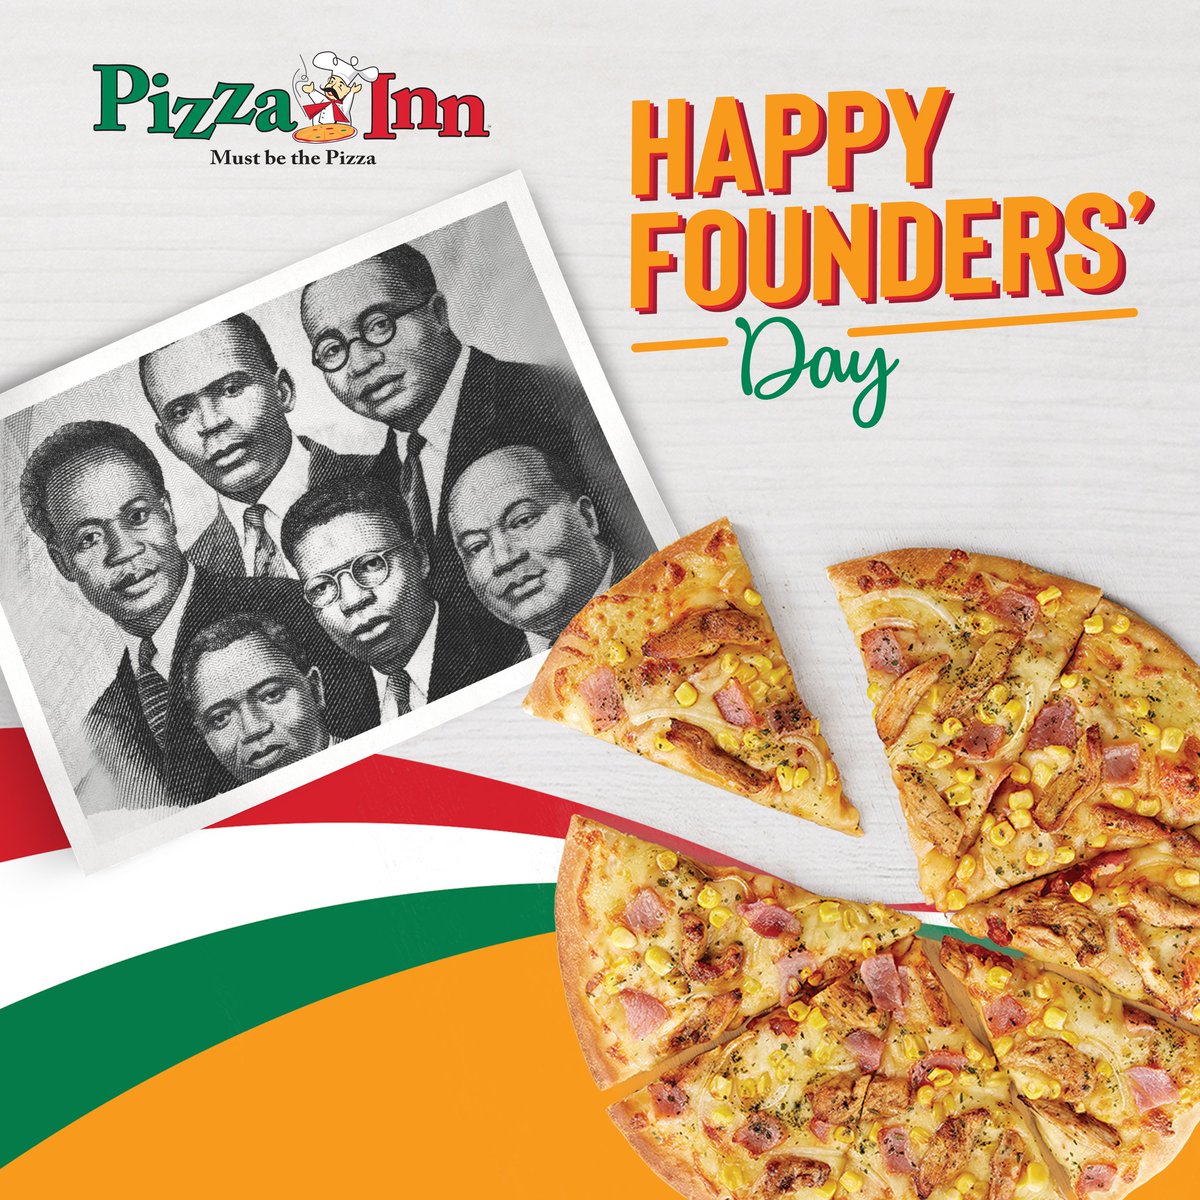 Happy Founder's Day Ghana!

#mustbethepizza